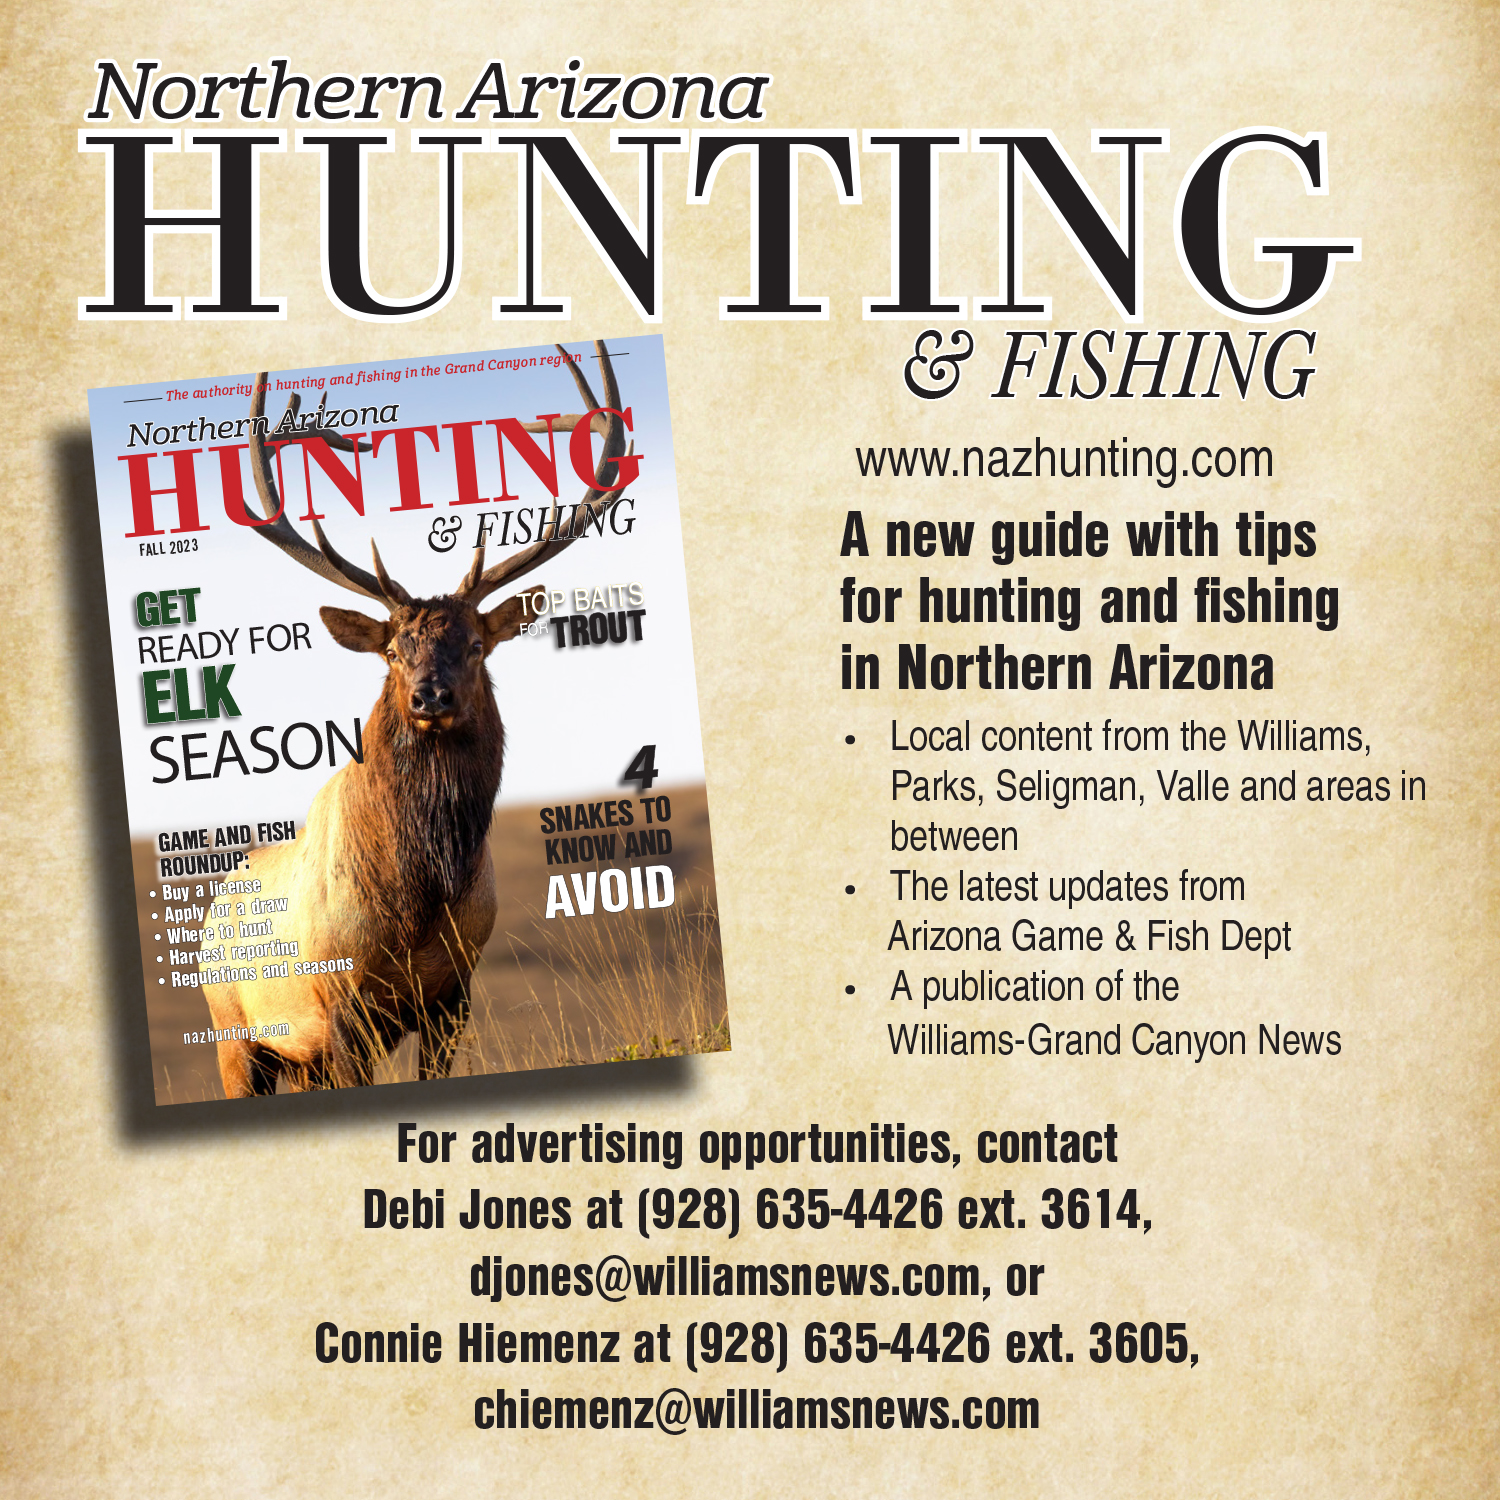 Northern Arizona Hunting & Fishing magazine premier edition out, Williams-Grand Canyon News